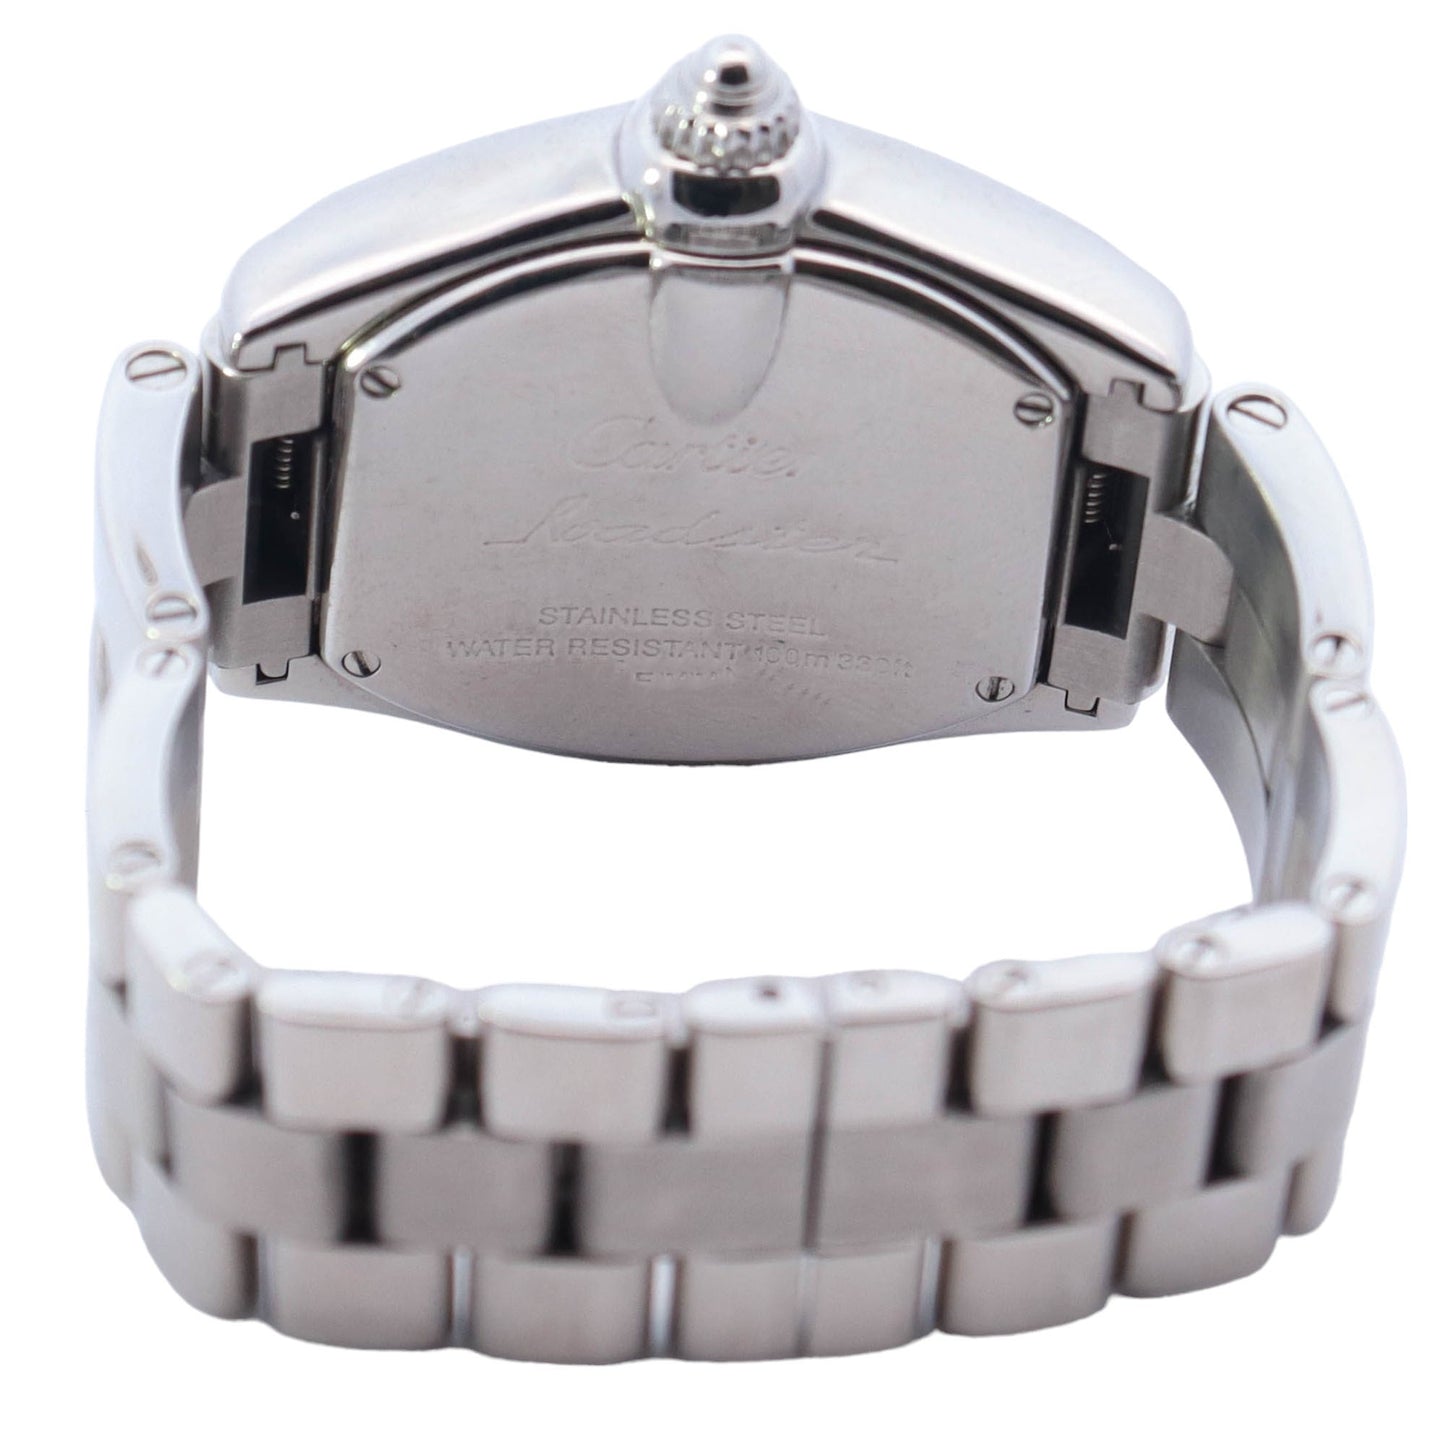 Cartier Roadster Stainless Steel 30mm x 36mm Silver Roman Dial Watch Reference# W62016V3 - Happy Jewelers Fine Jewelry Lifetime Warranty